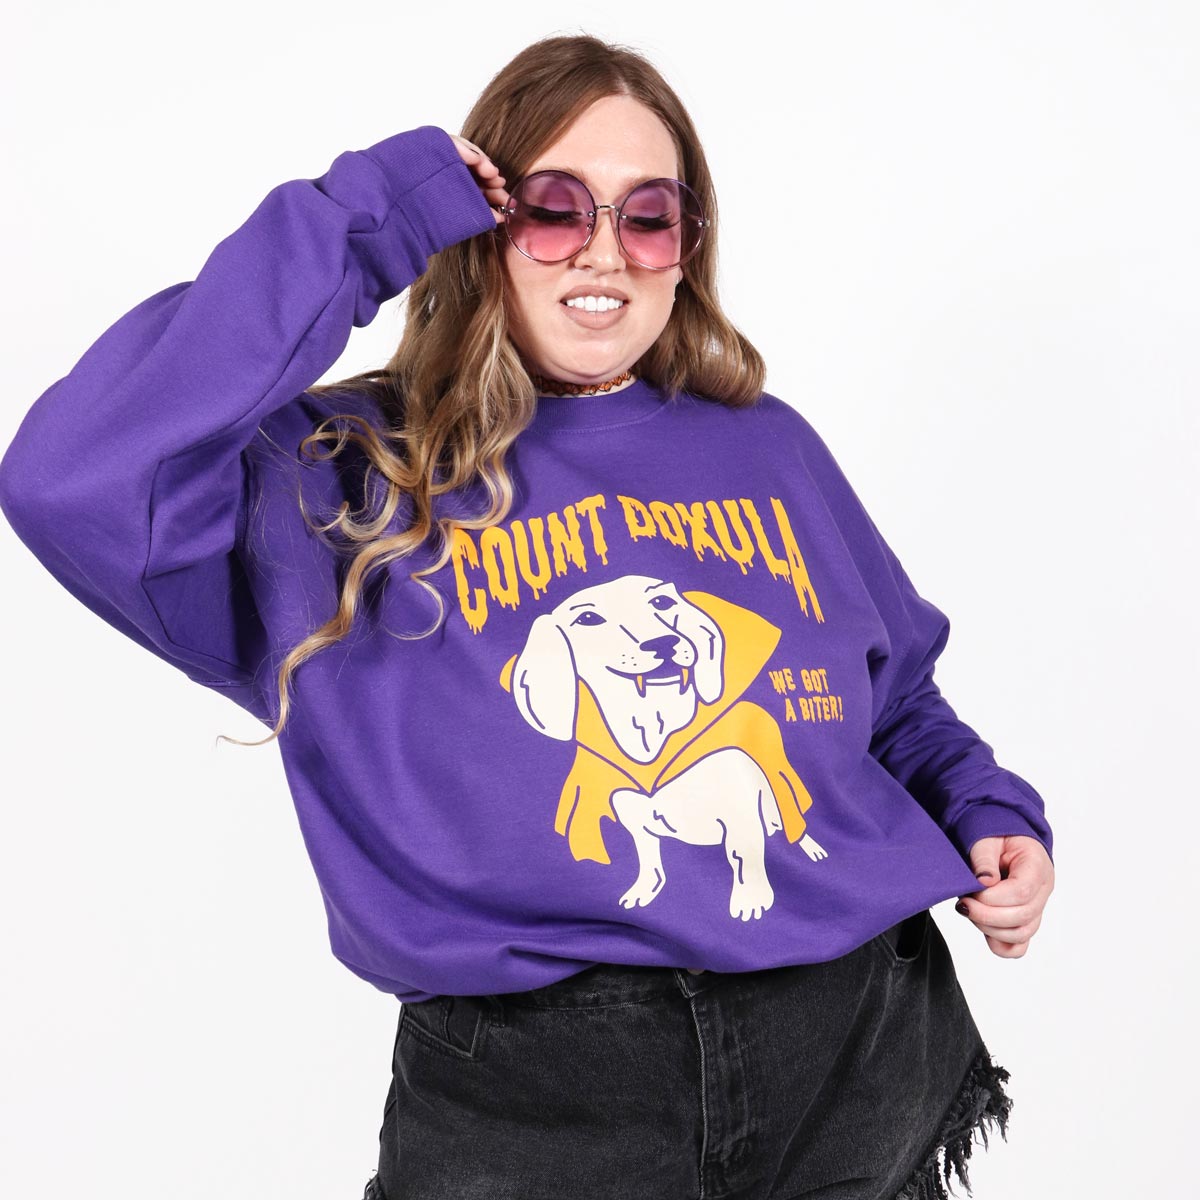 count doxula unisex crew sweatshirt | purple - bean goods